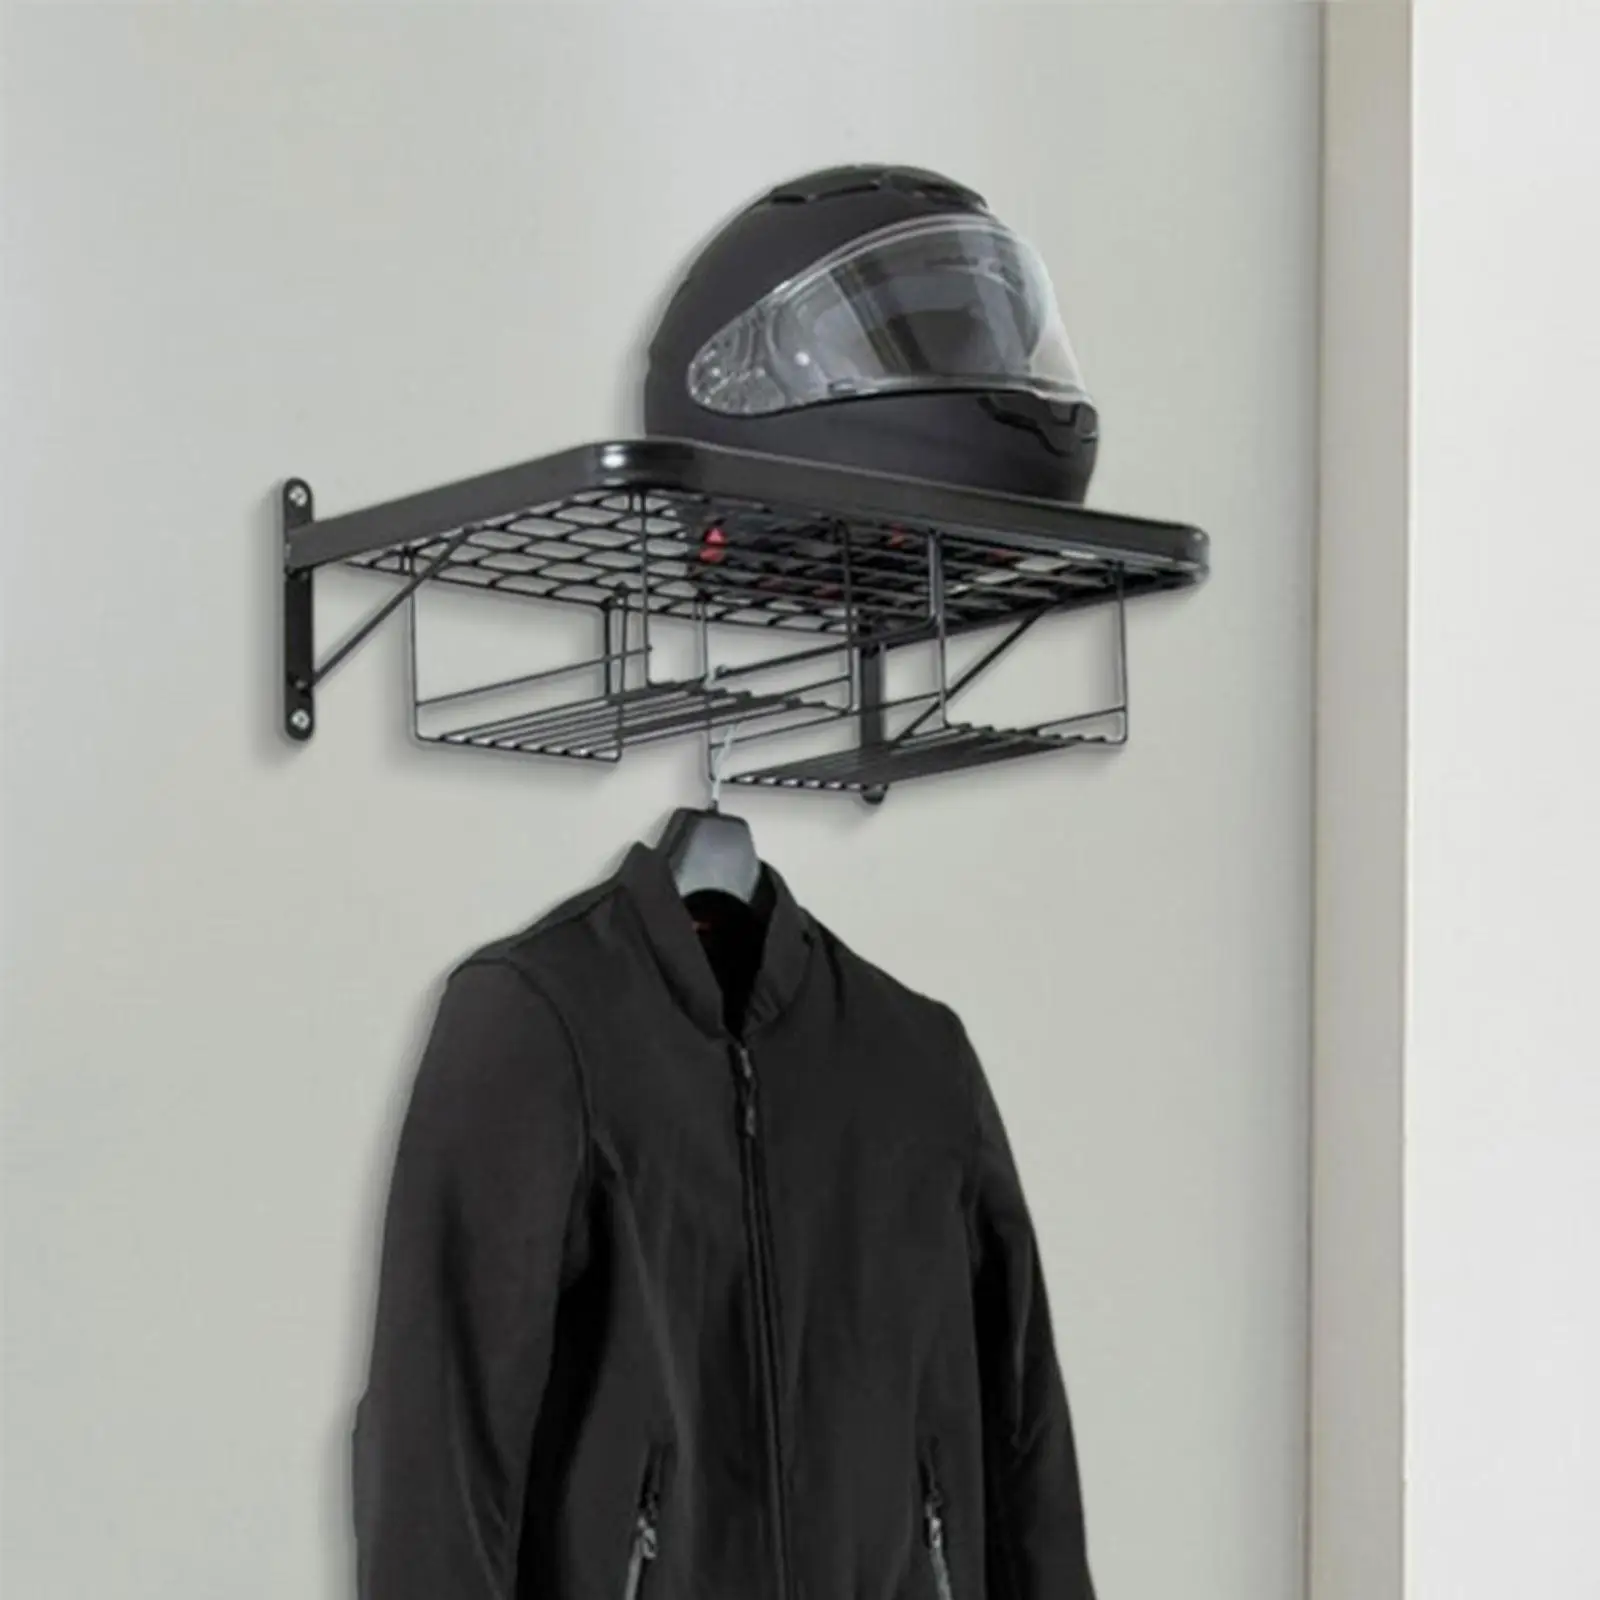 

Wall Mounted Helmet Rack Space Saving Jacket Hanger Glove Rack Jacket Holder Organizer for Hats Coats Caps Jacket Gloves